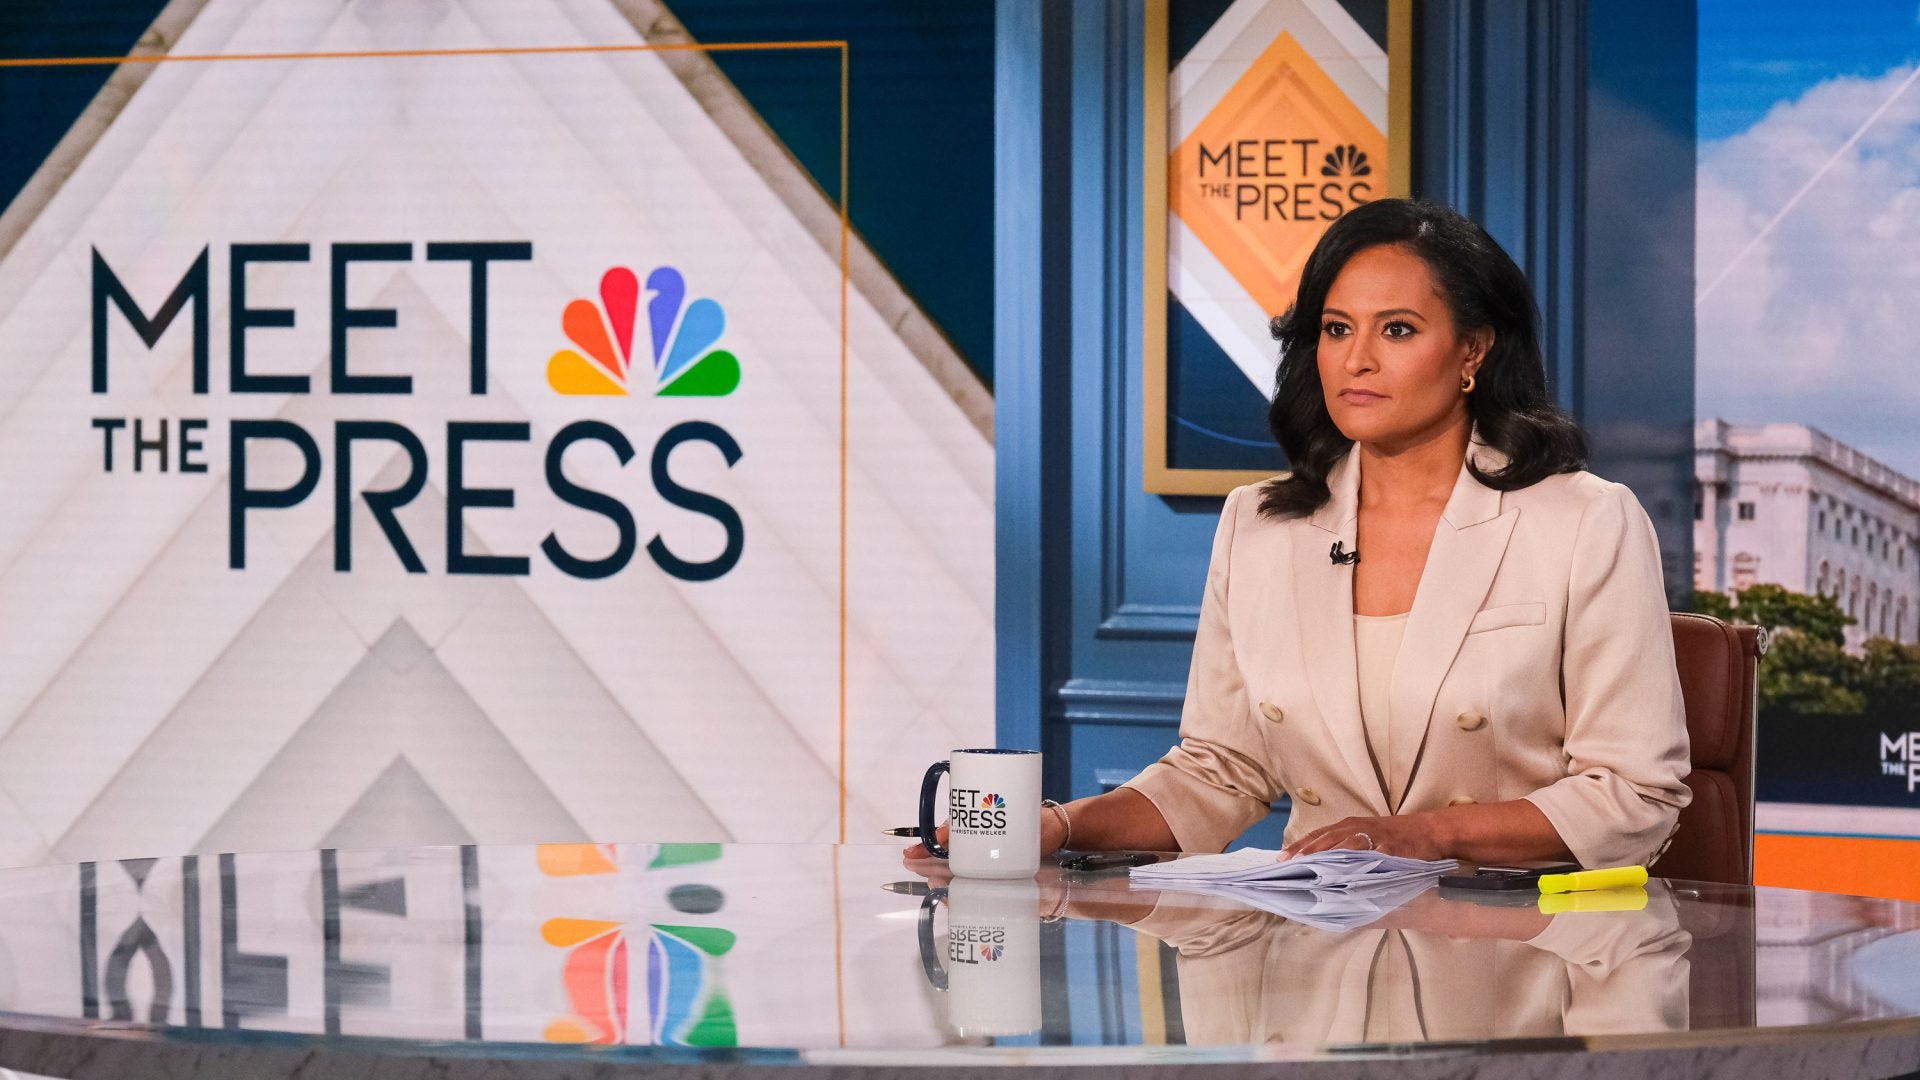 Black Women In The News: Kristen Welker Makes Historic Debut As Host Of "Meet The Press"